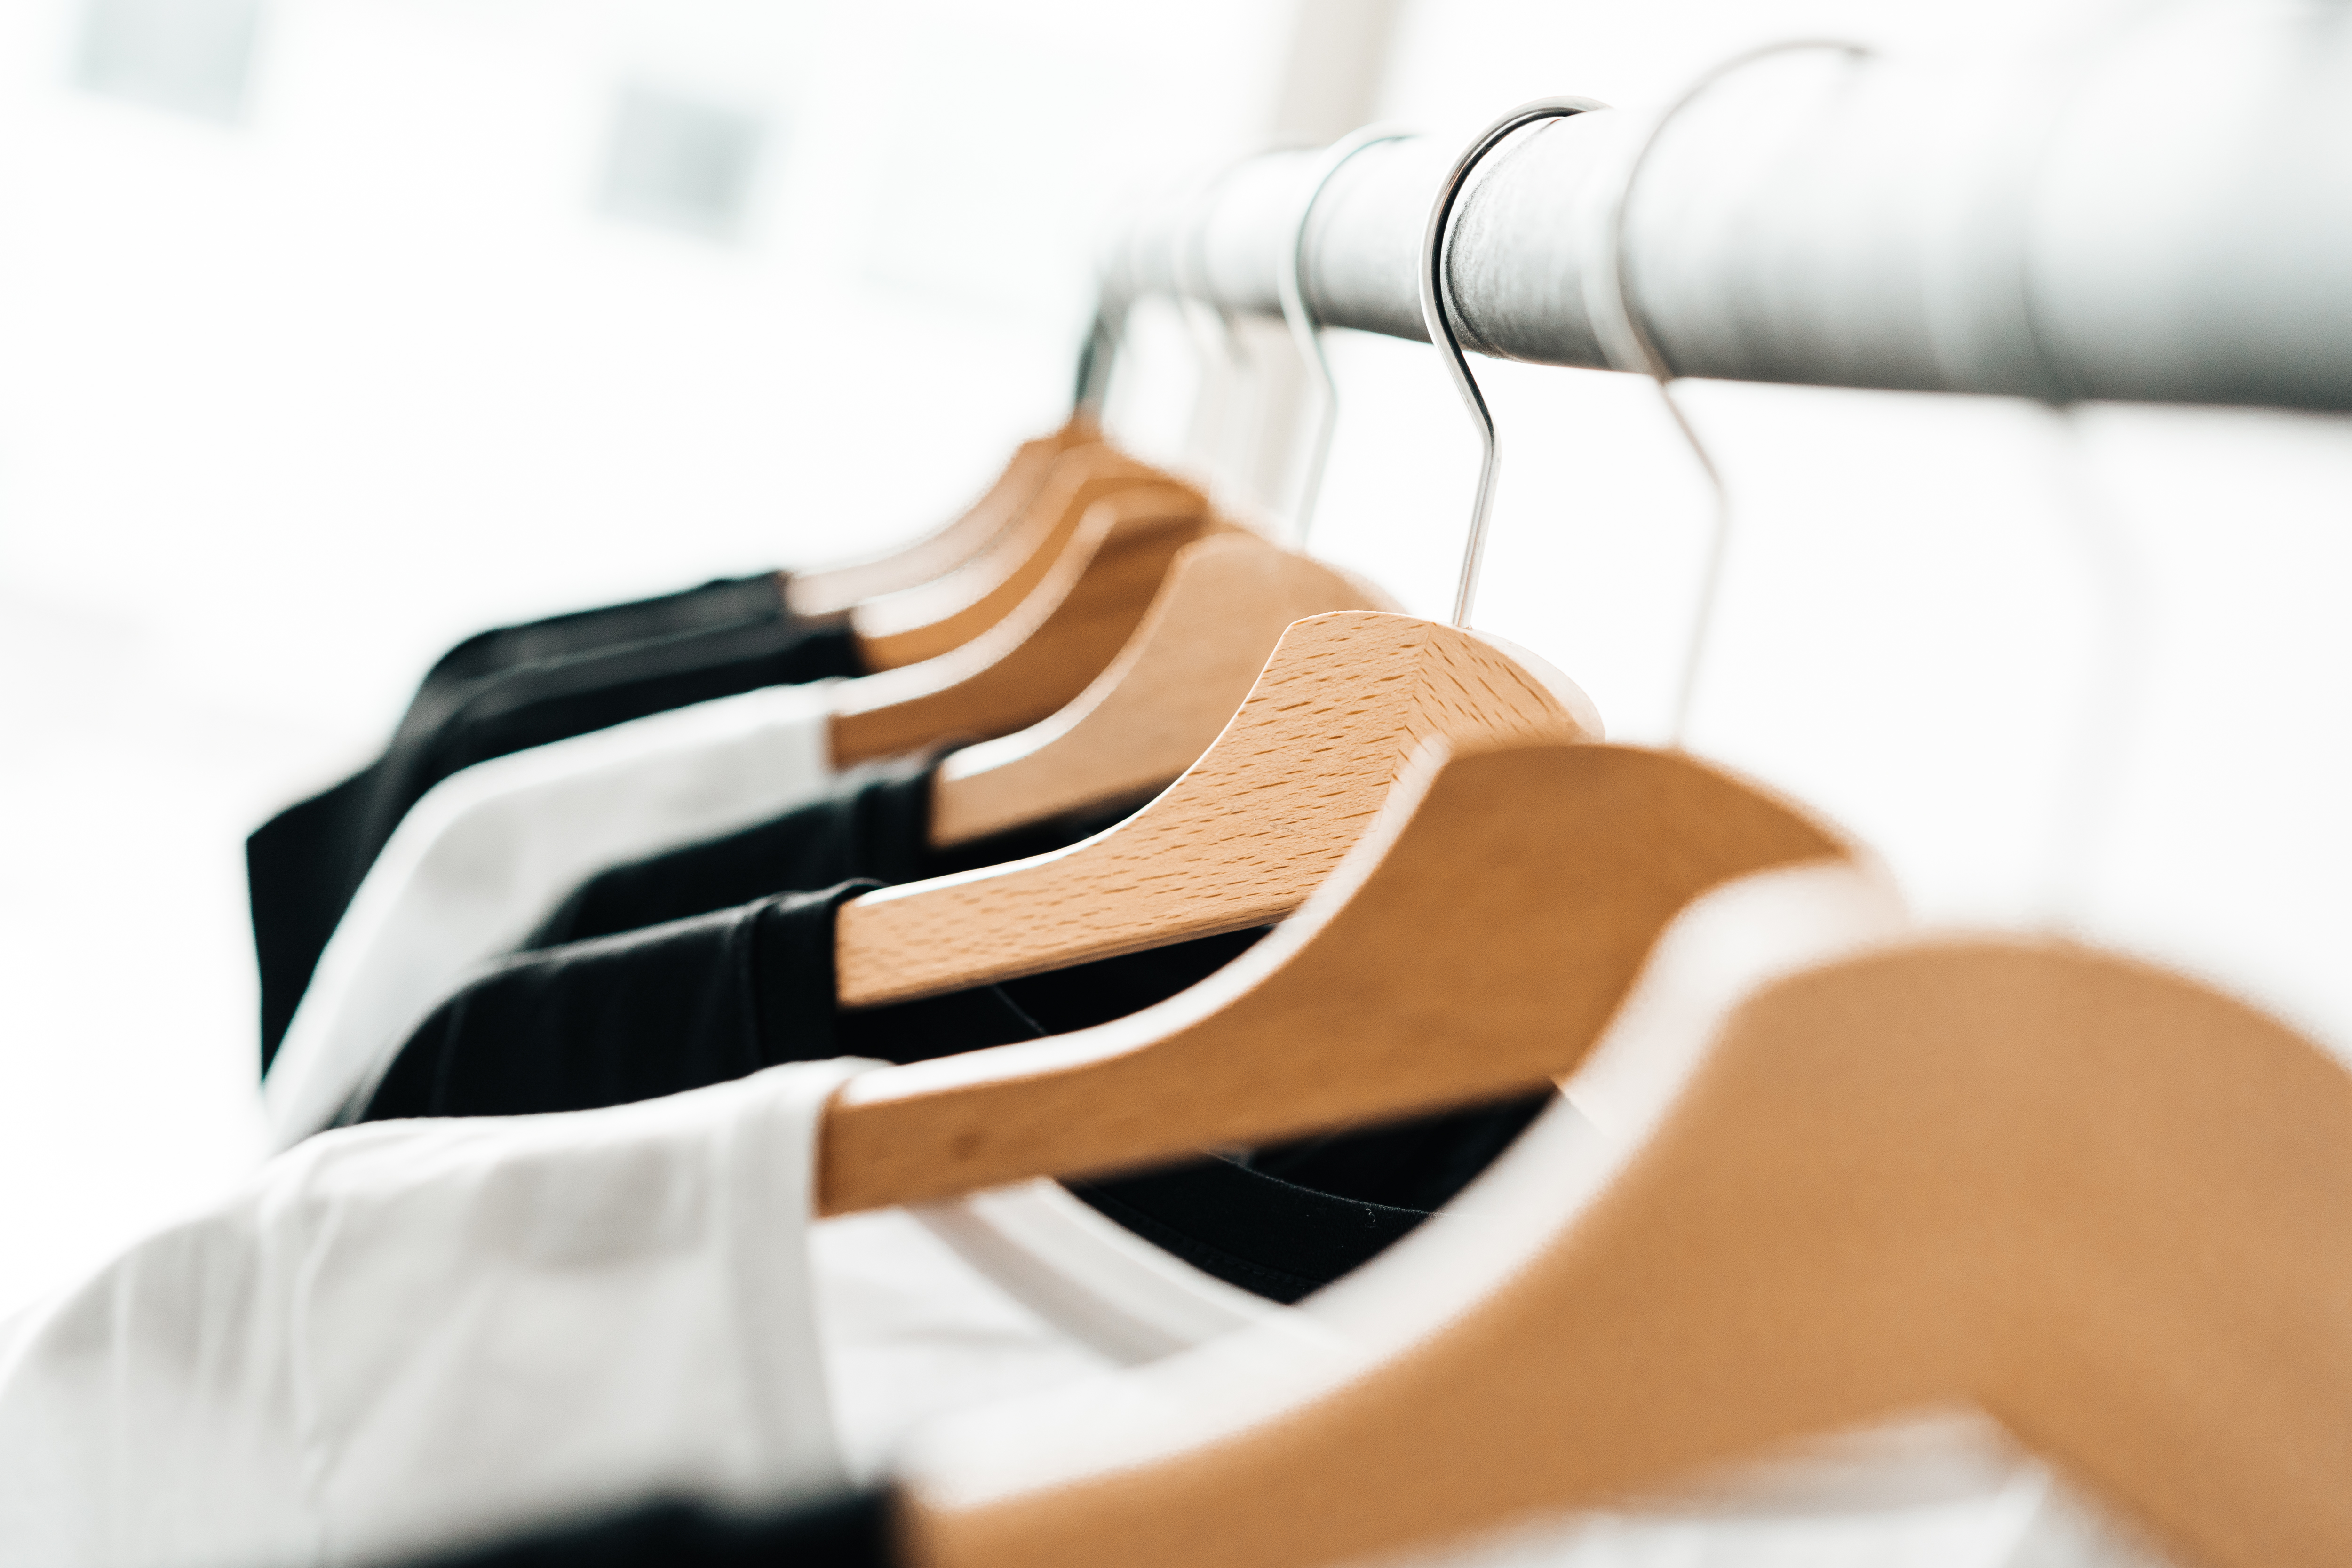 https://picjumbo.com/wp-content/uploads/wooden-t-shirt-hangers-in-fashion-apparel-store-2.jpg